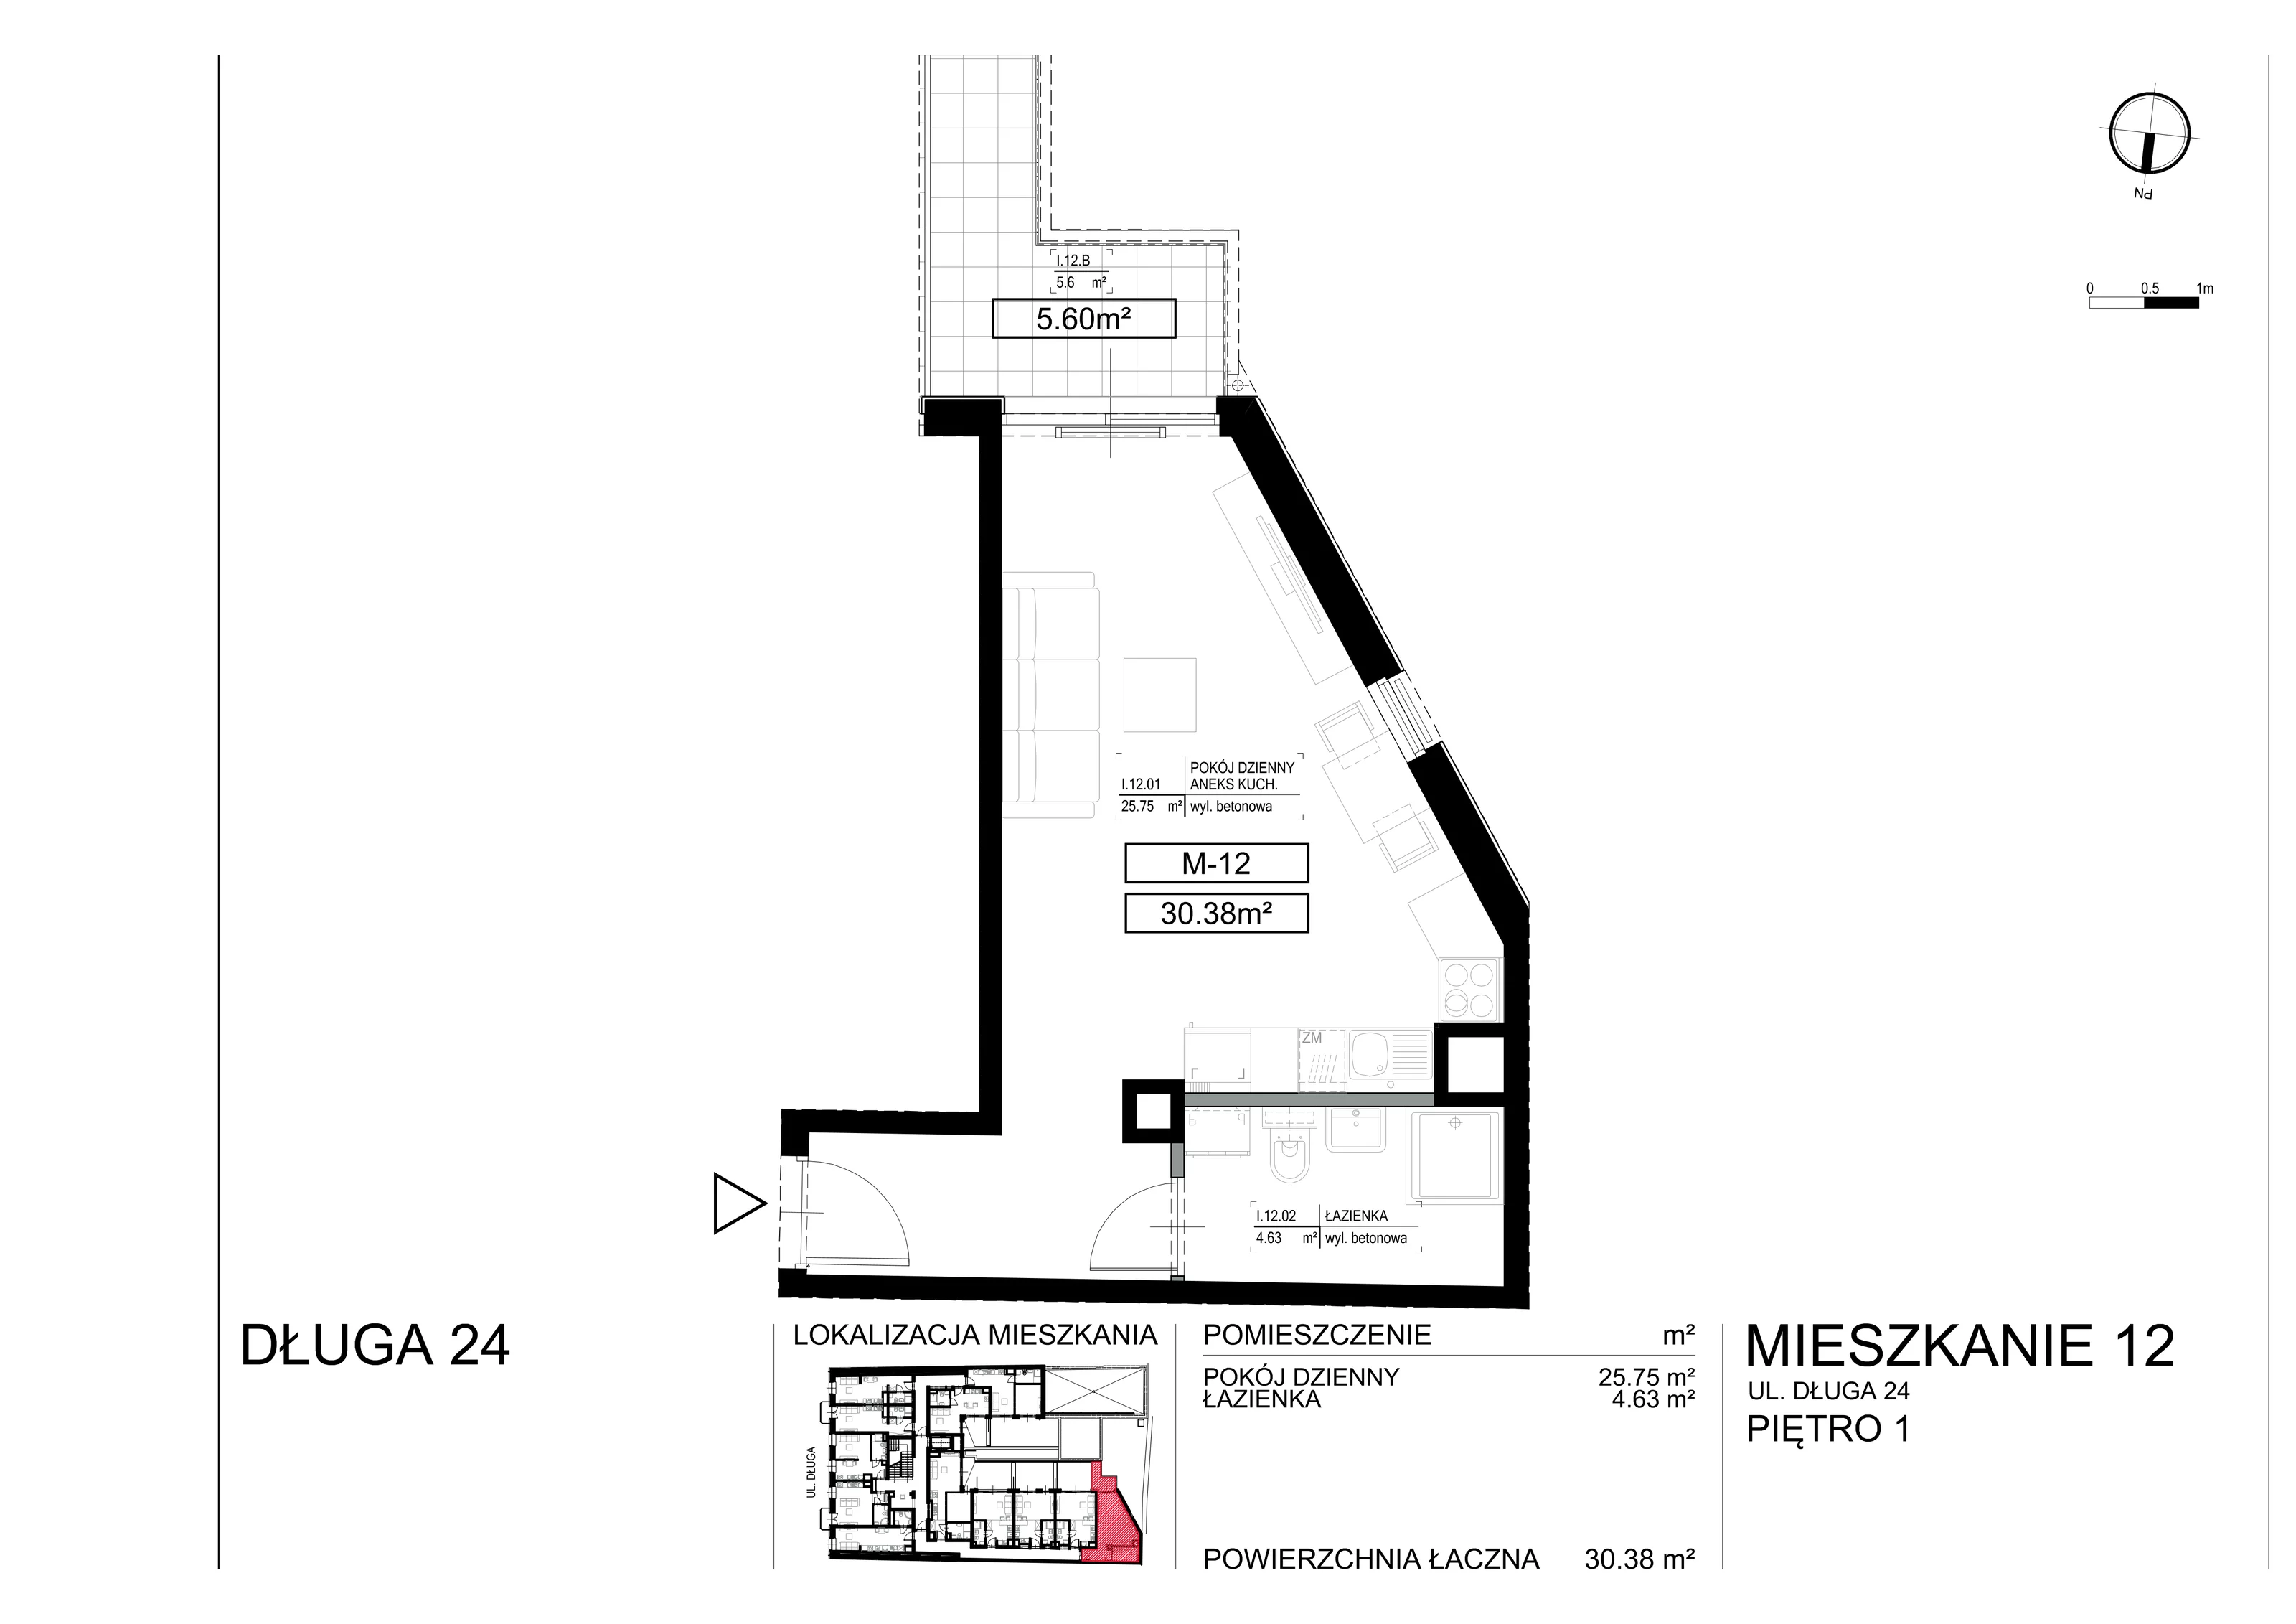 Apartament 30,38 m², piętro 1, oferta nr M12, Długa Residence, Kraków, Stare Miasto, Kleparz, ul. Długa 24